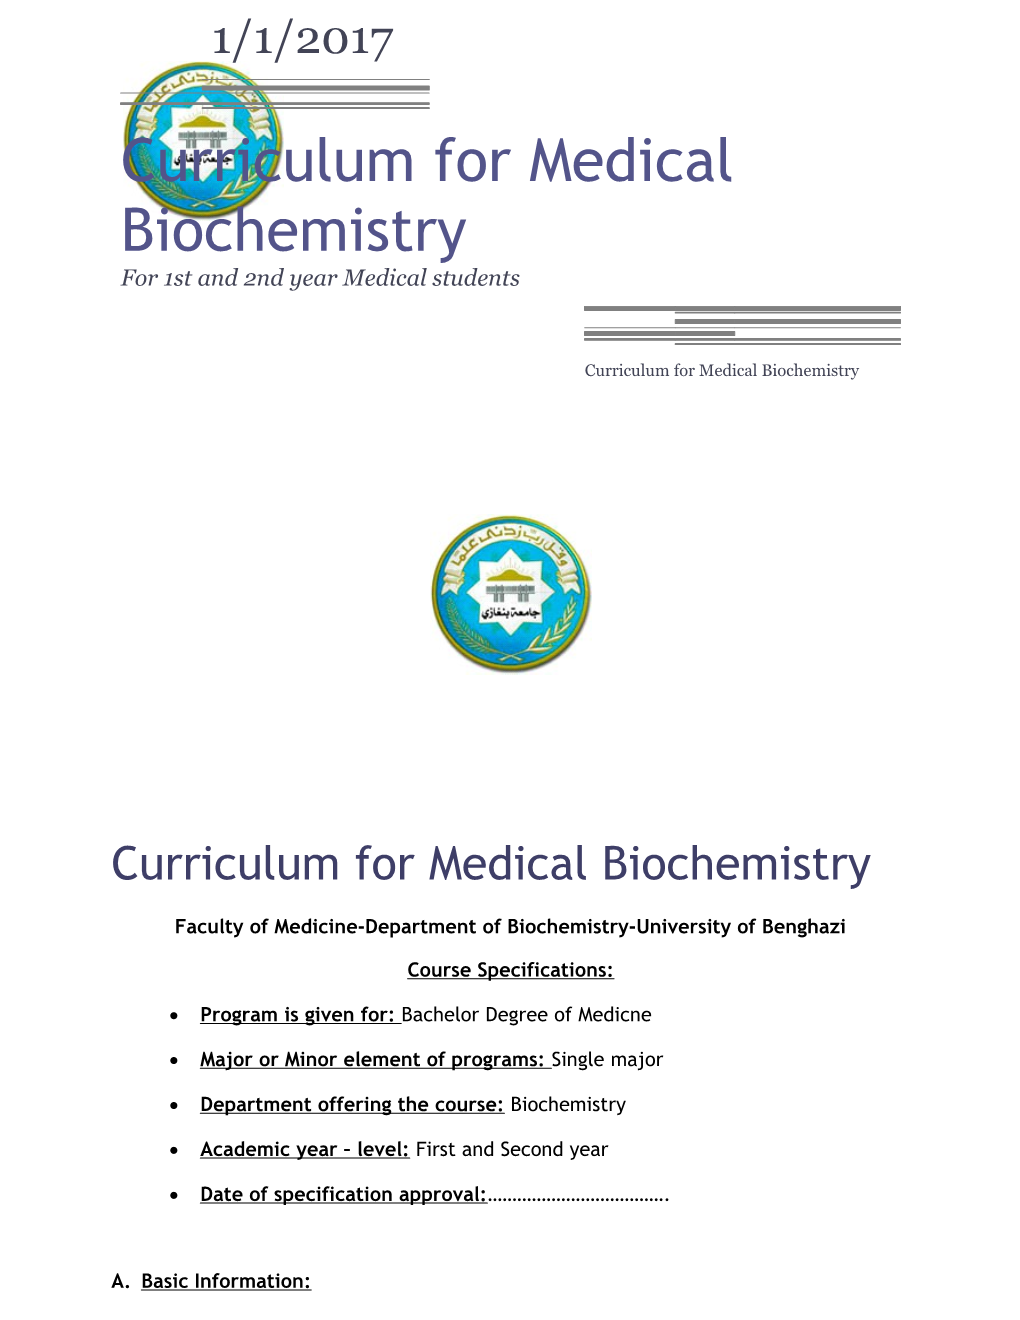 Curriculum for Medical Biochemistry